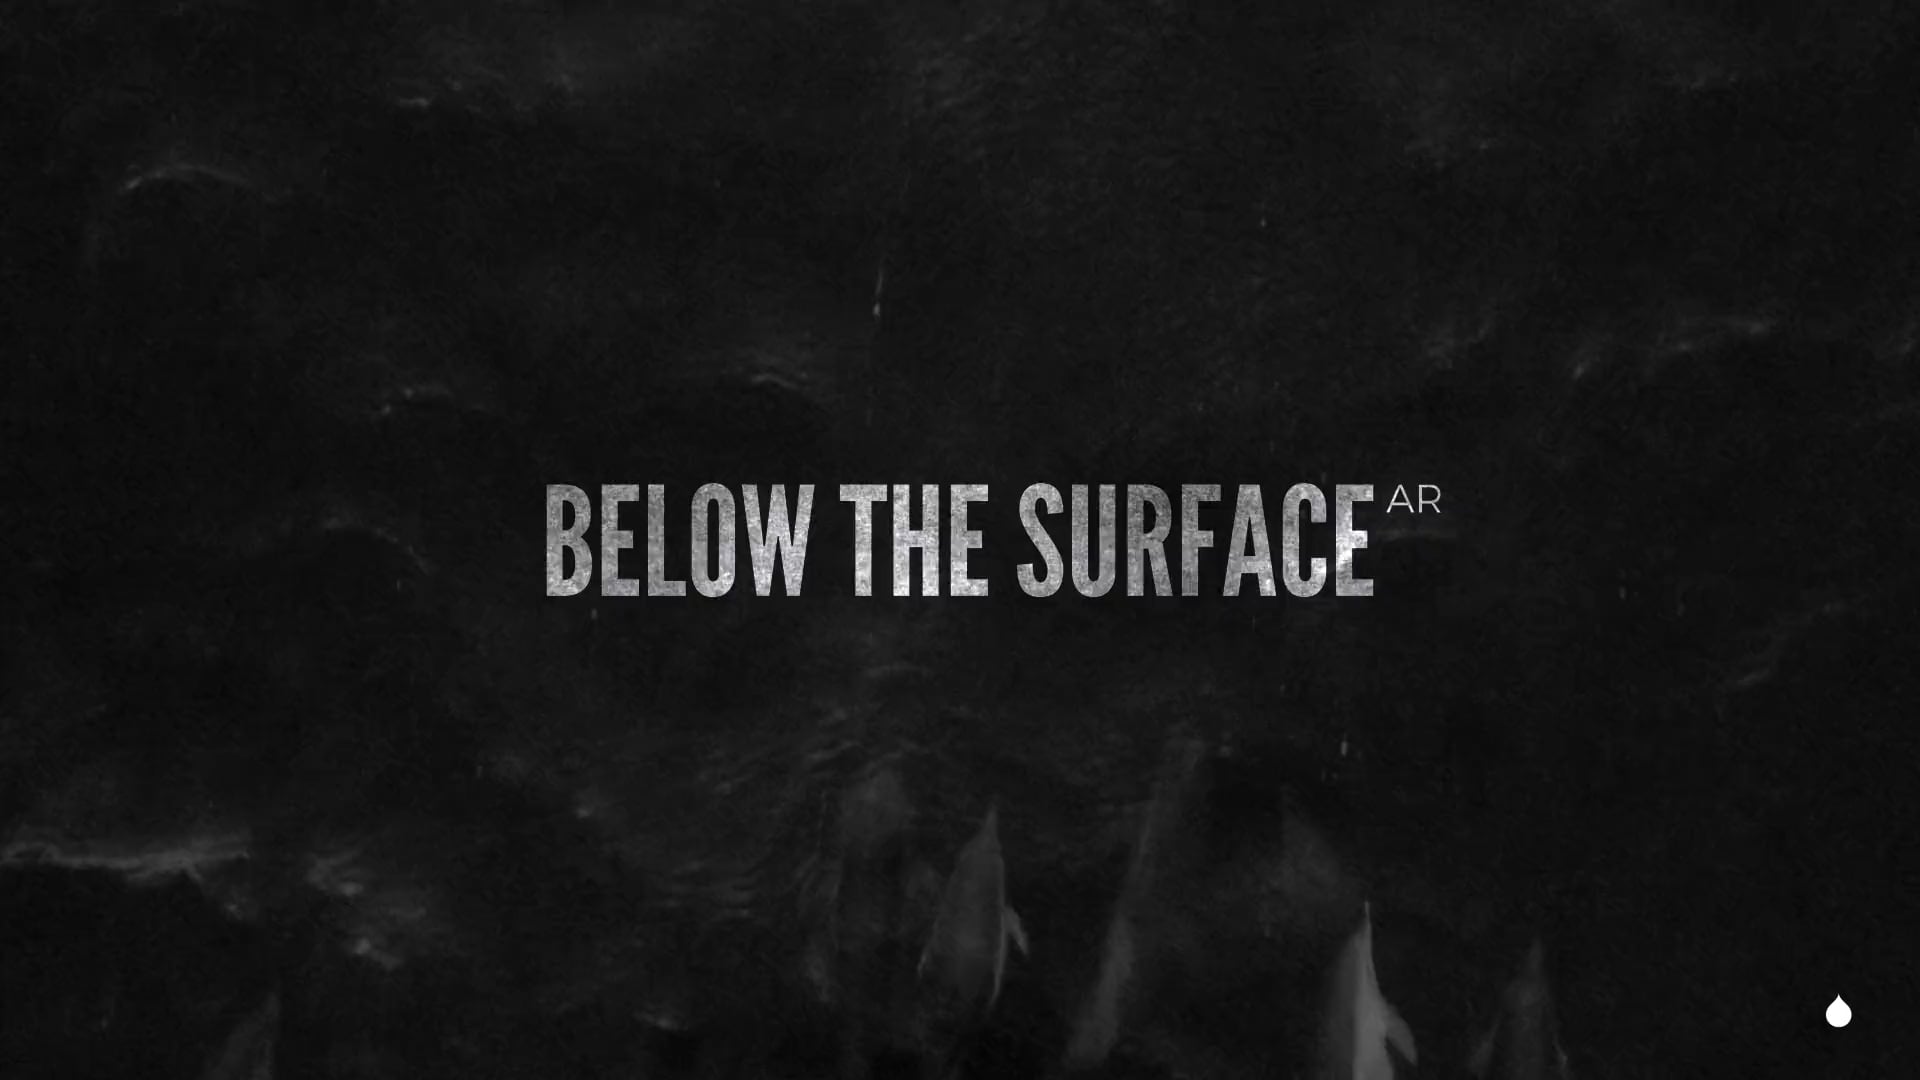 Below the surface перевод